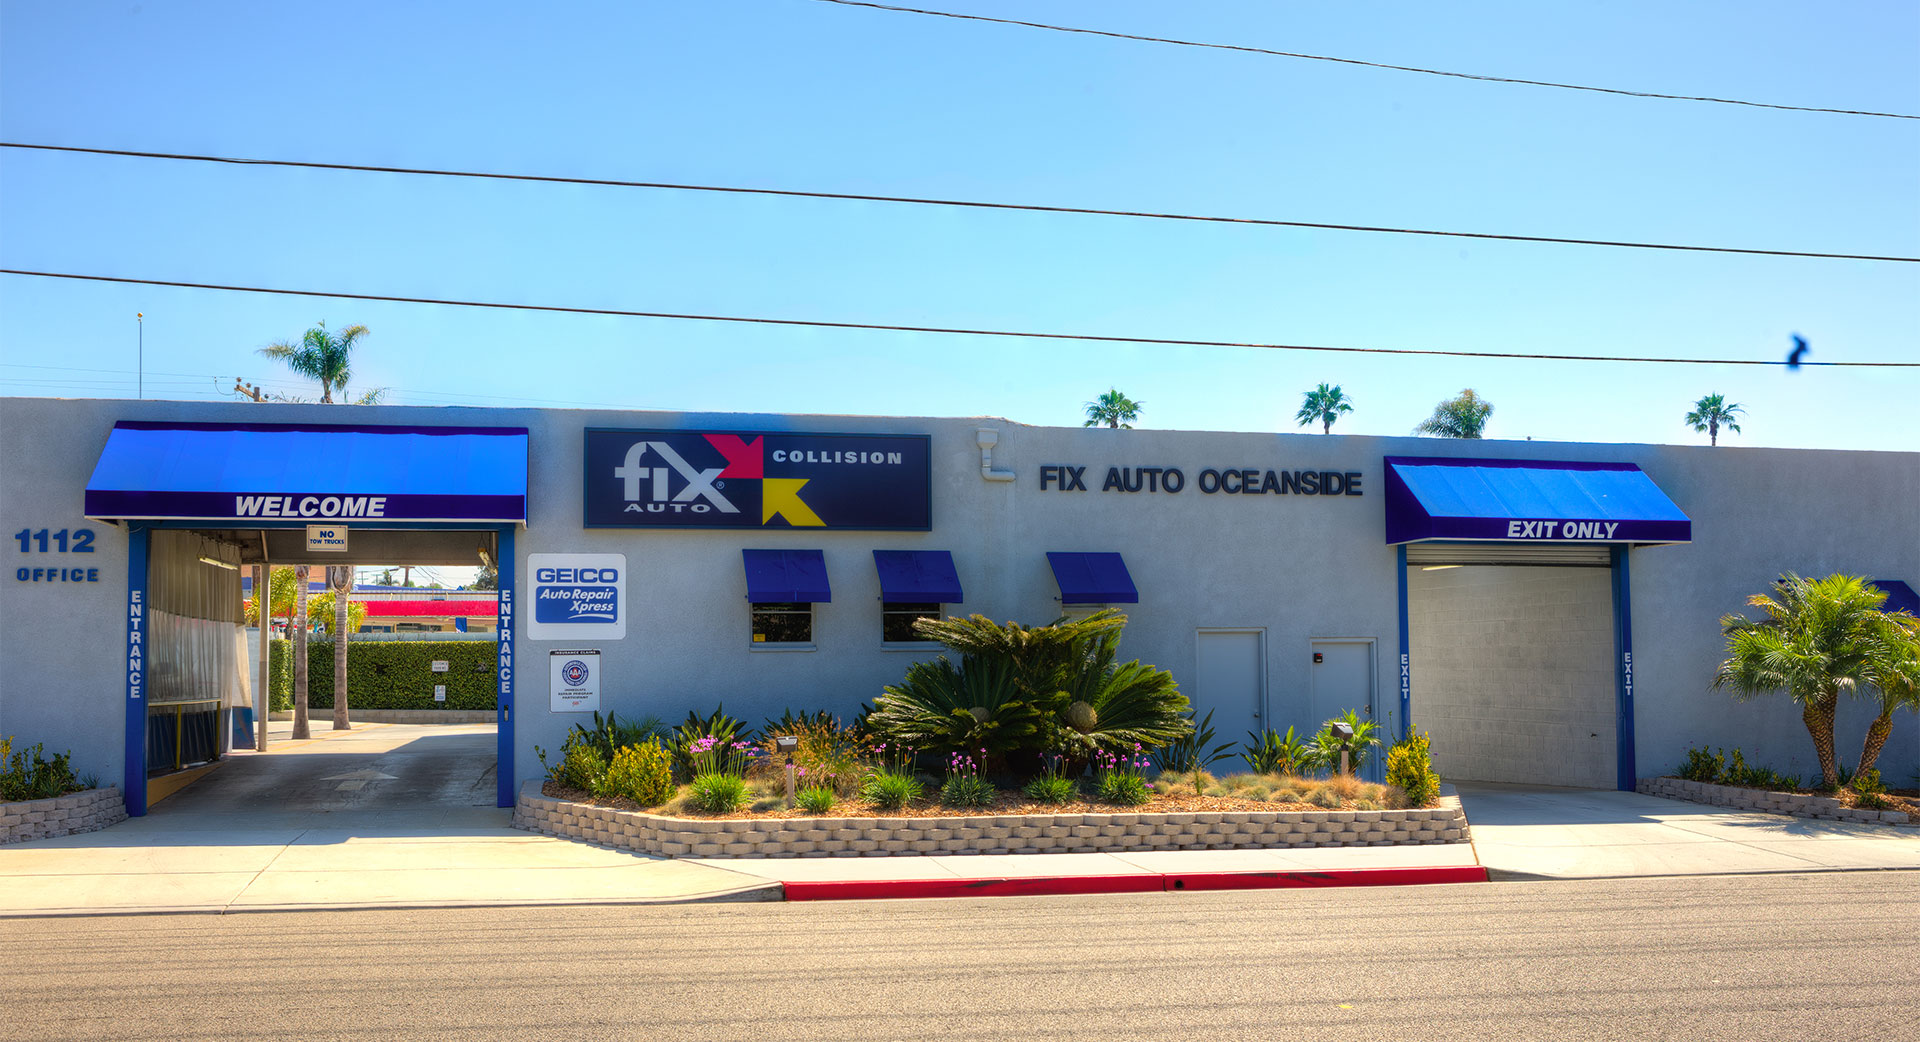 Fix Auto Oceanside Auto Body Shop Sign and Building Exterior